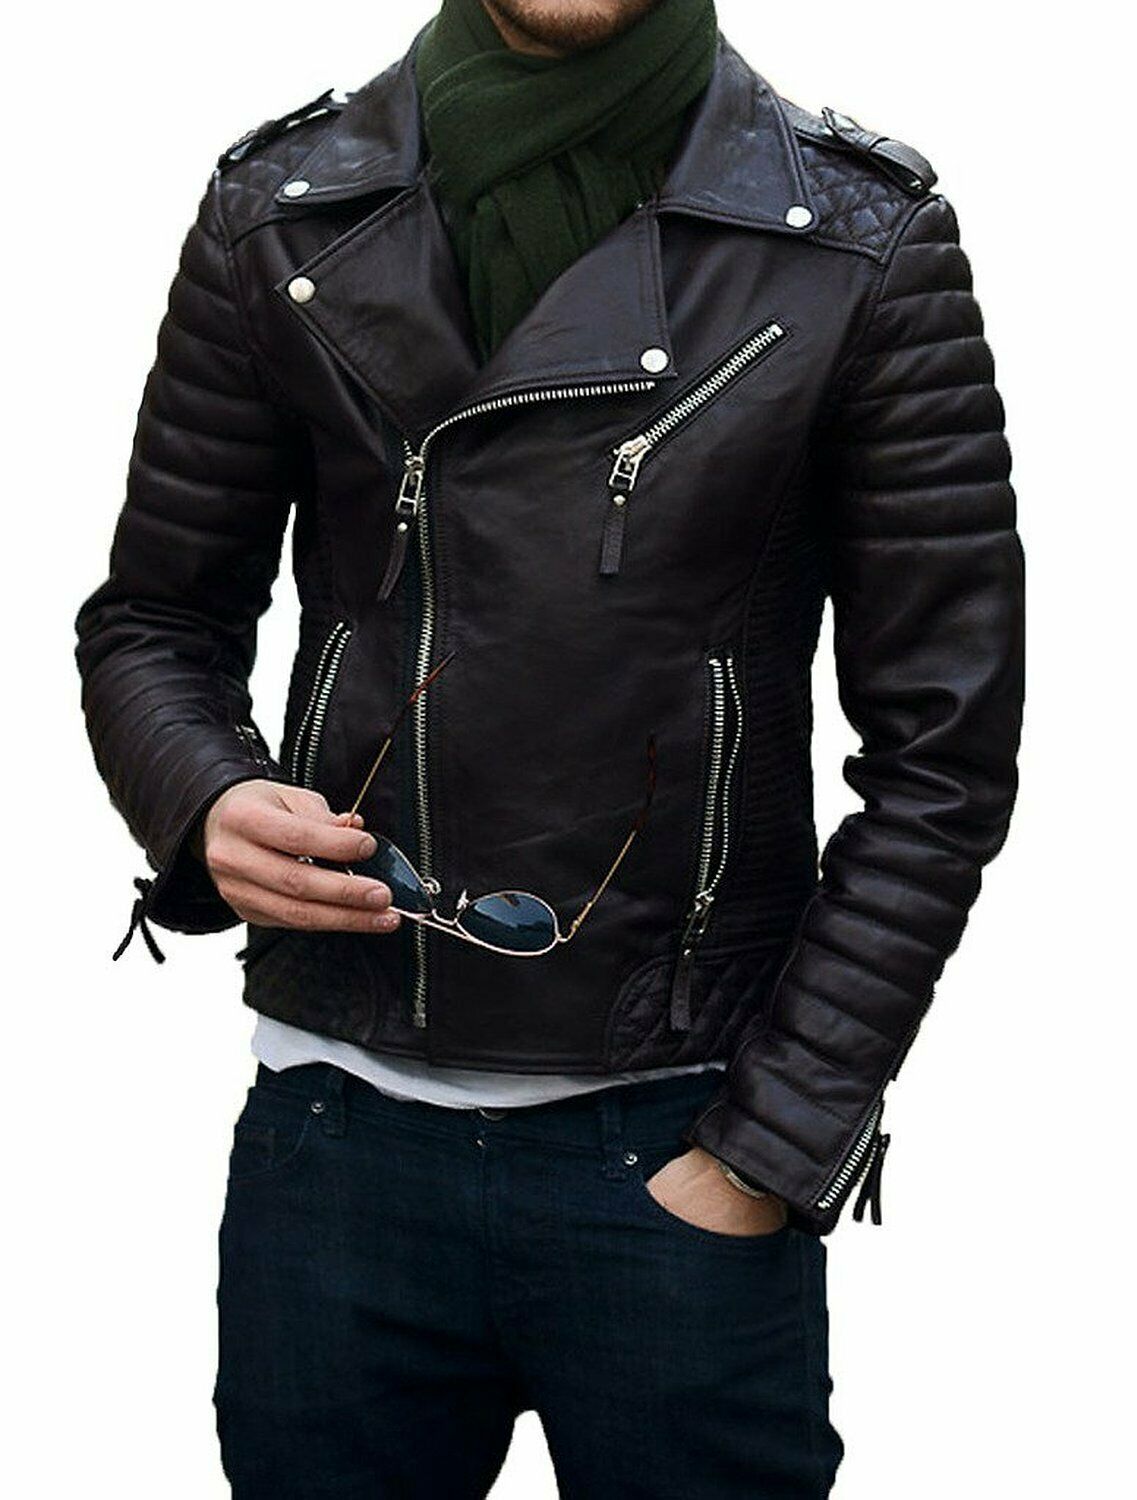 Men's Leather Jackets: Bomber, Motorcycle, Biker